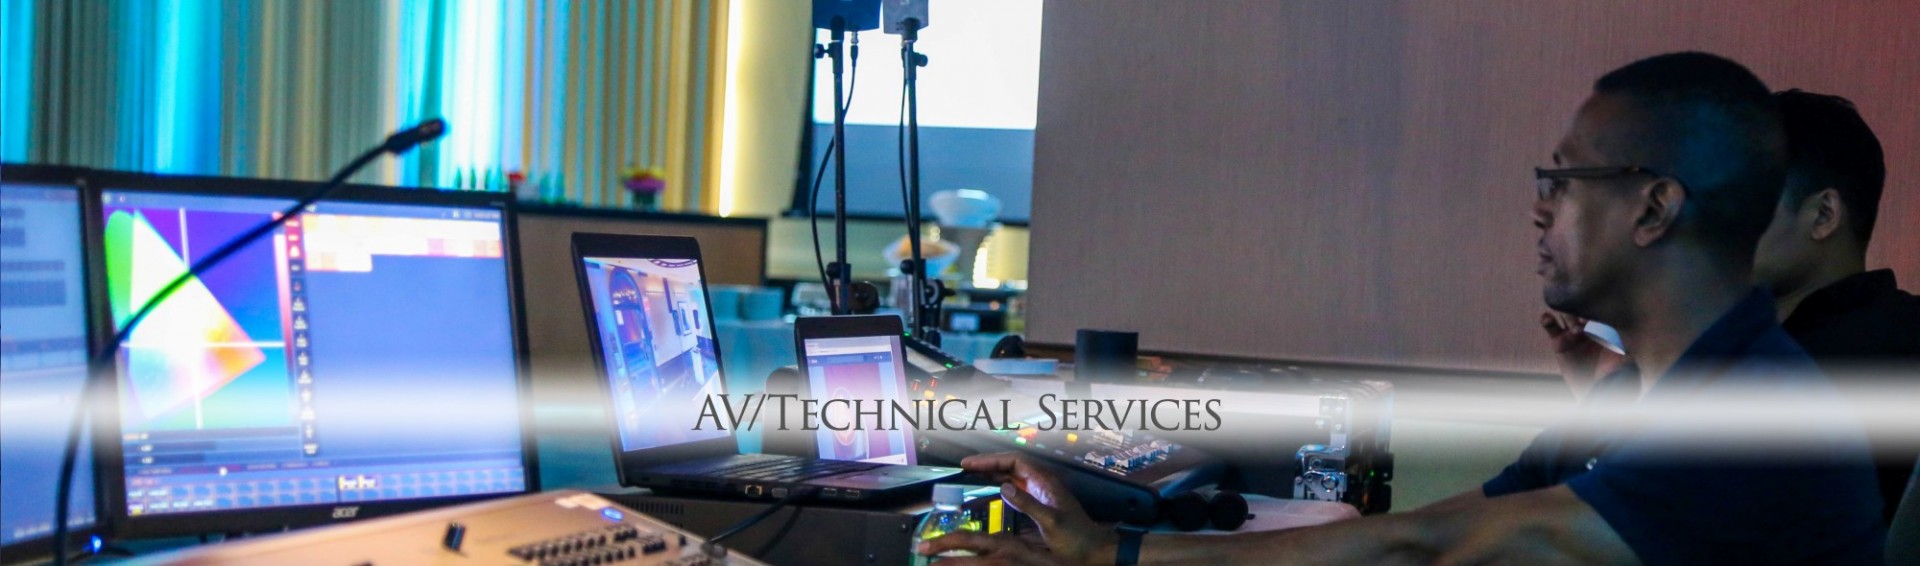 AV and Technical Services